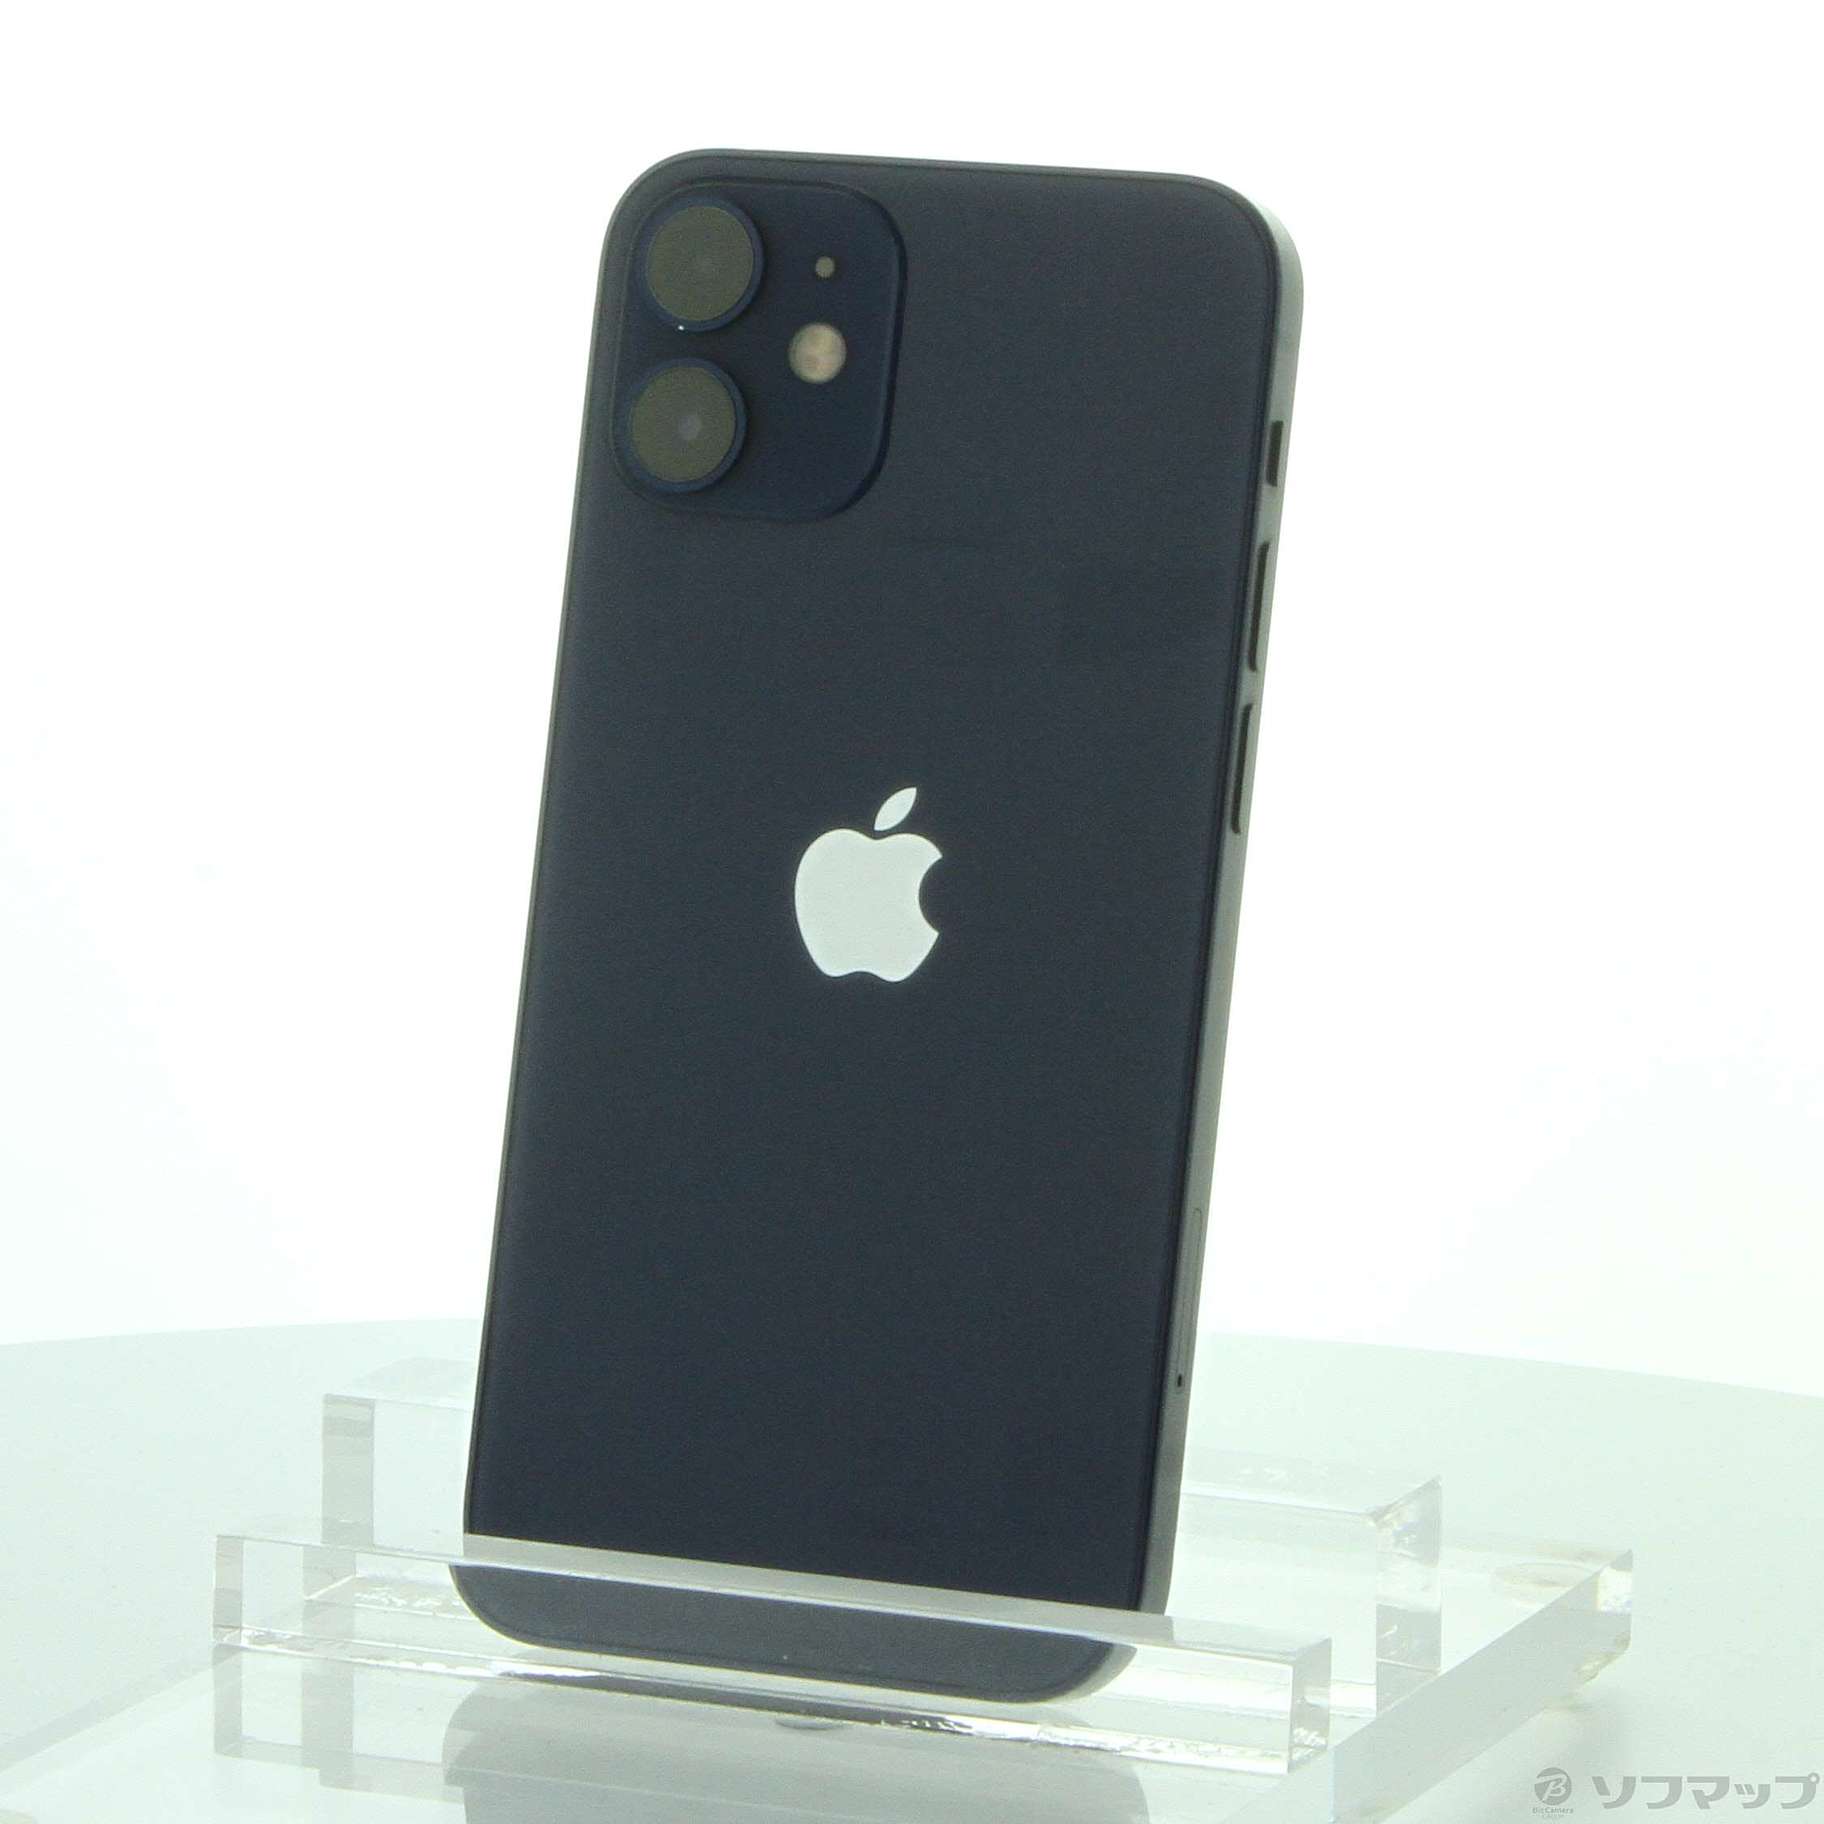 iPhone 12 mini 128GB SIMフリー [ブルー] 中古(白ロム)価格比較 ...